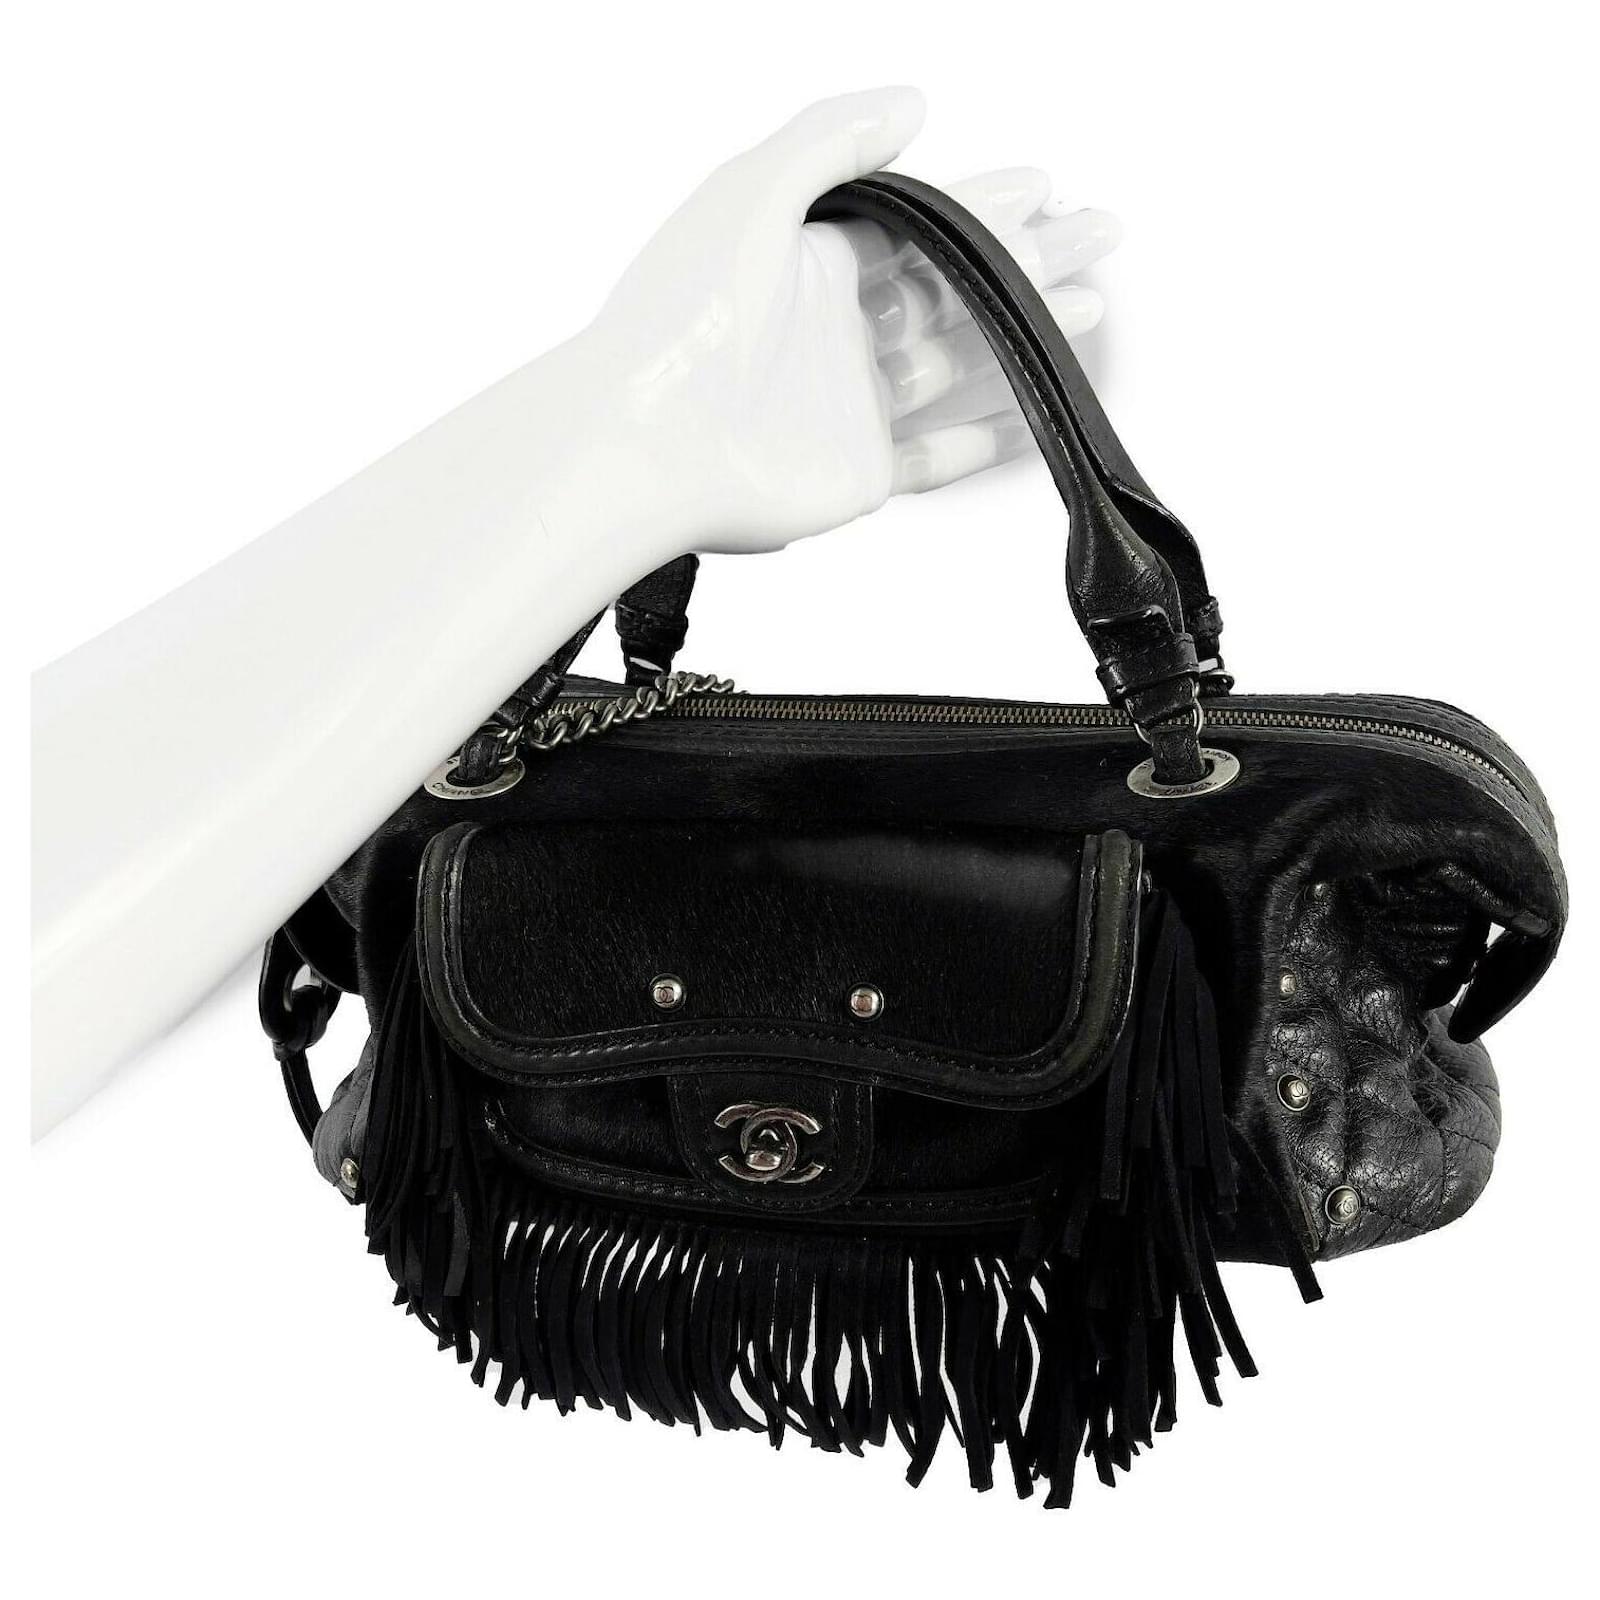 Handbags Chanel Chanel- Paris Dallas Large Calfskin Ponyhair Fringe Bowling - Shoulder Bag